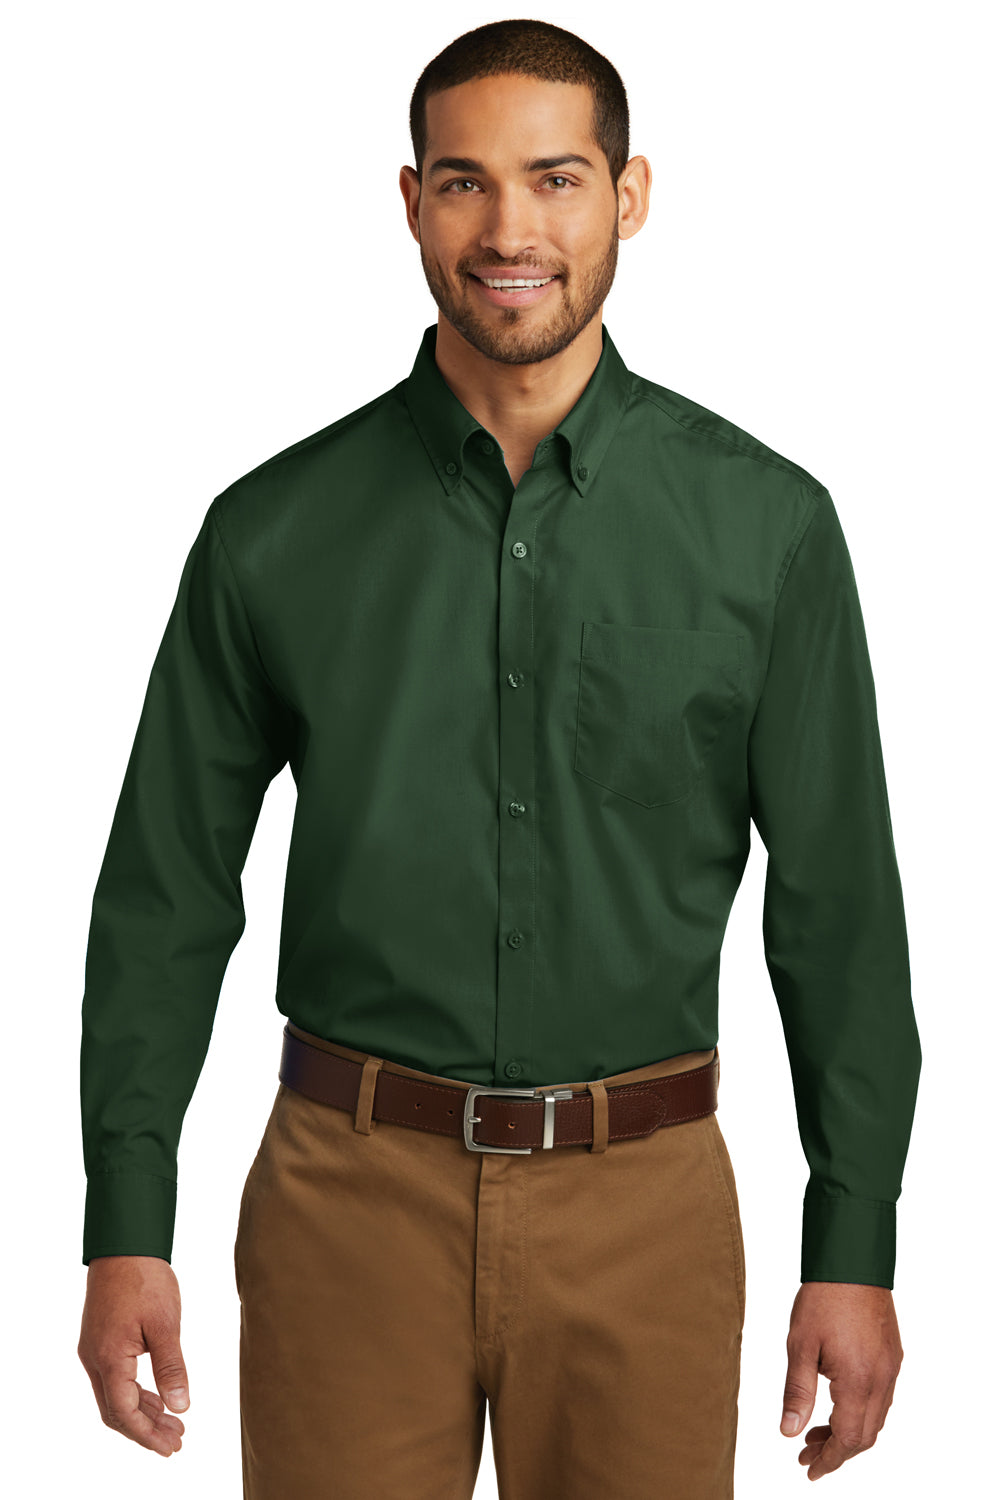 Men's Long Sleeve Button Down Shirts